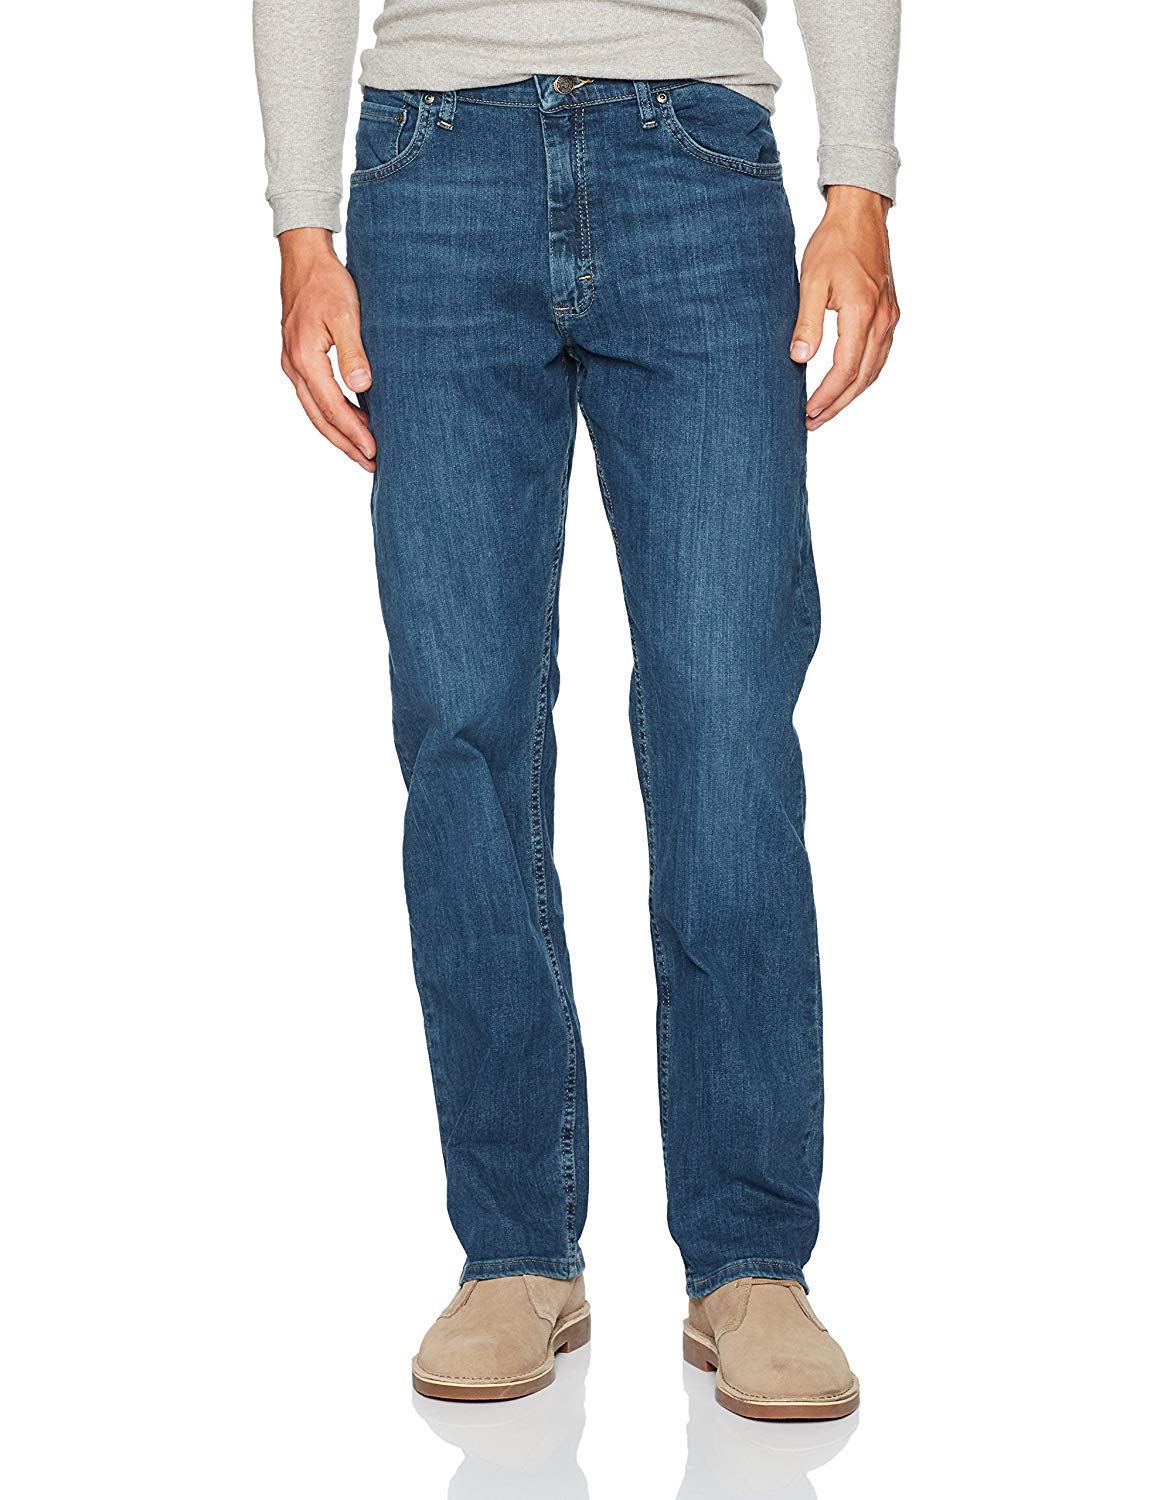 Wrangler Authentics Men's Classic 5-Pocket Relaxed Fit Jean, Slate Flex, 32W x 30L